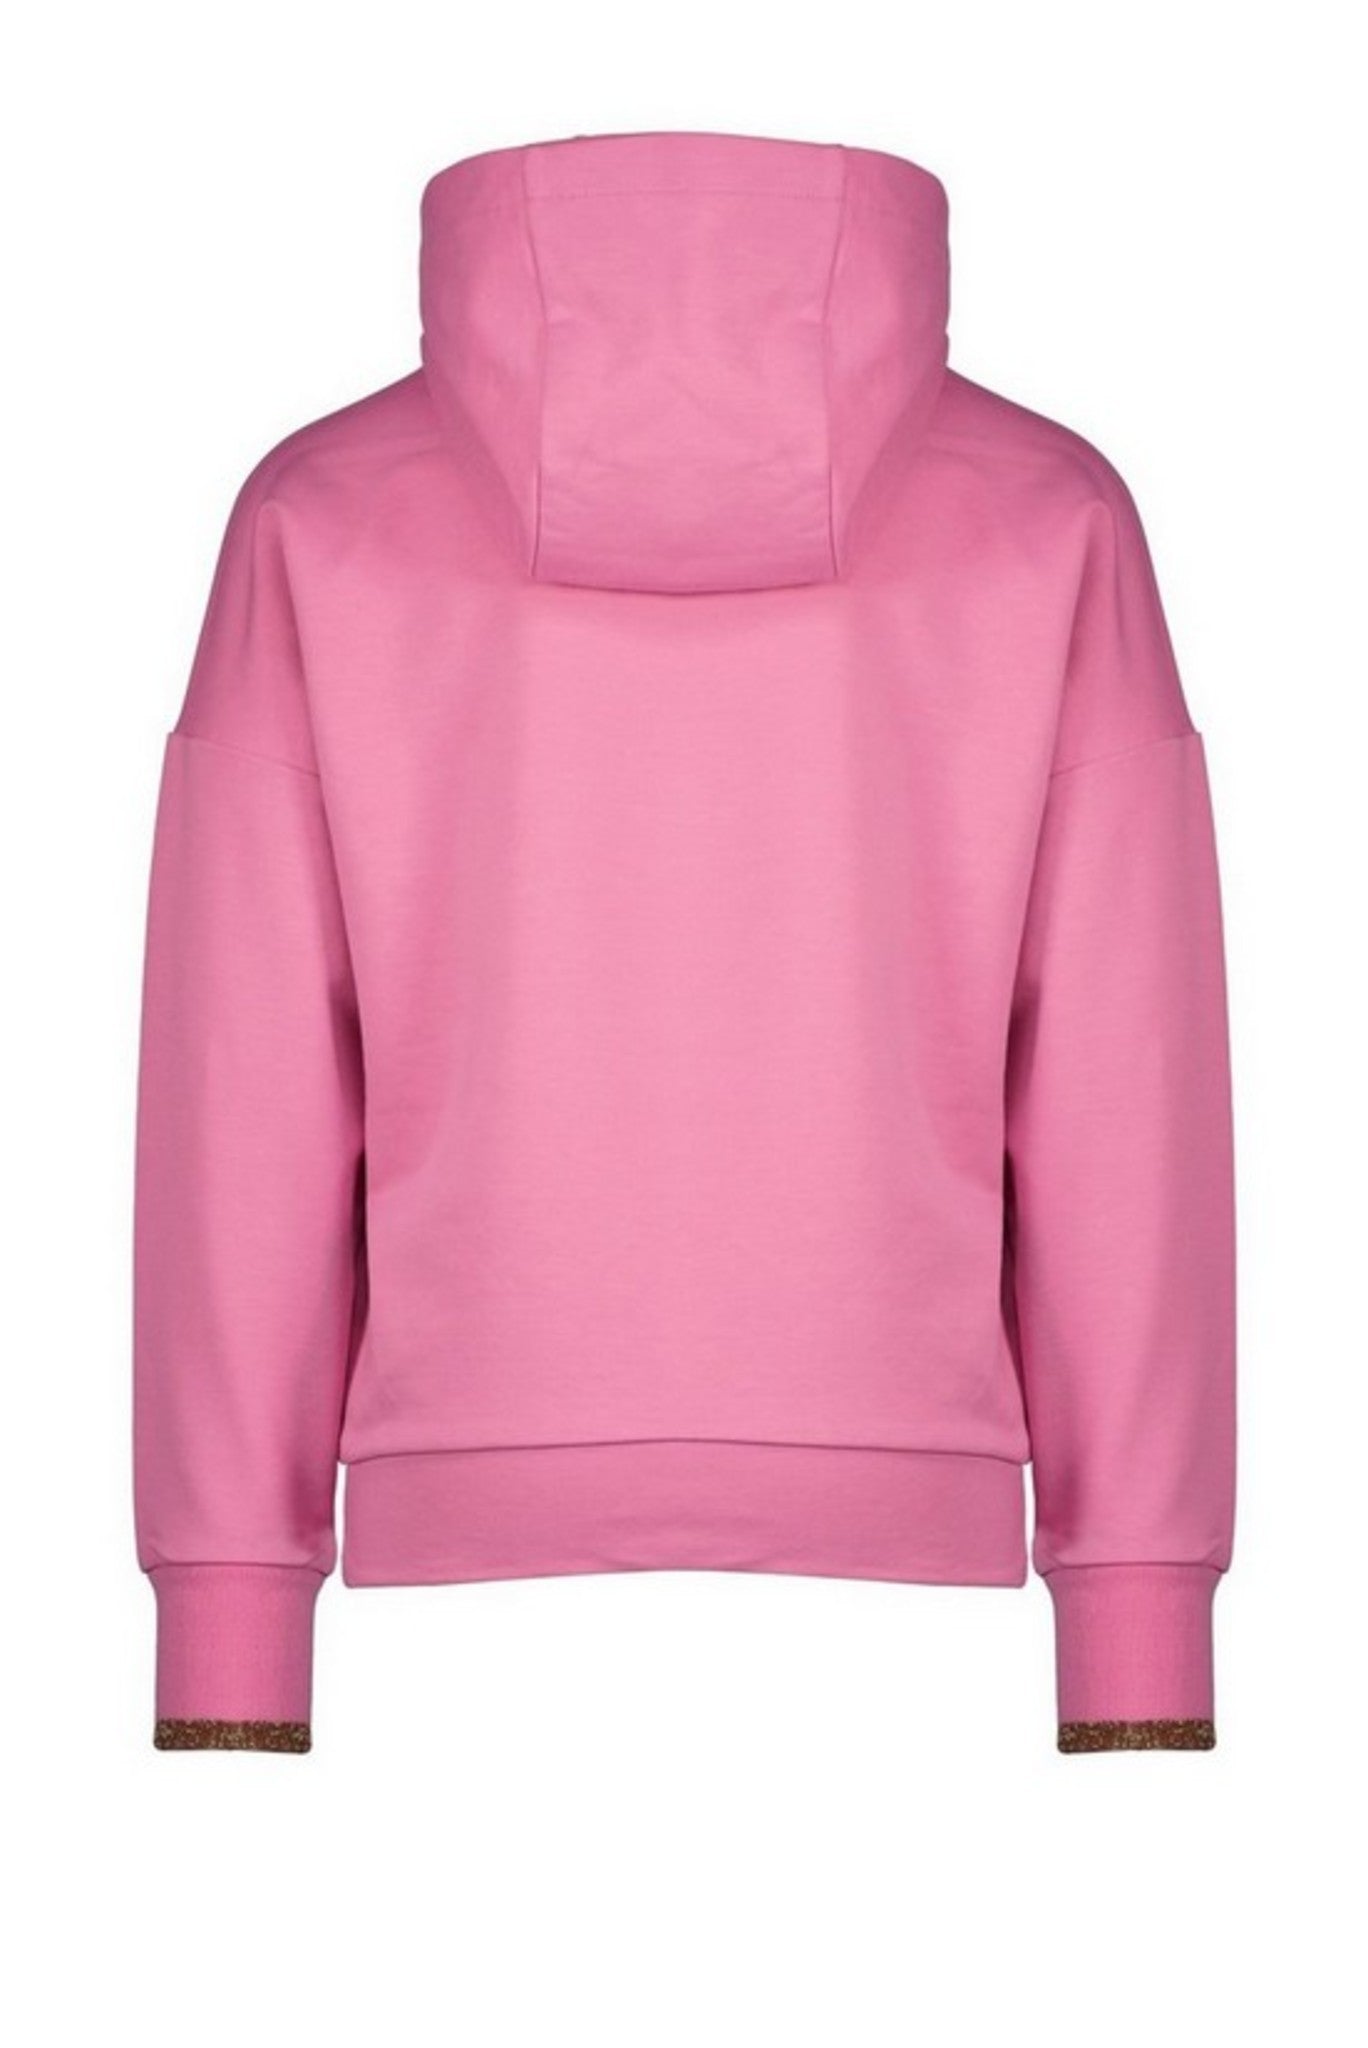 NONO - KumyB hooded sweater Horizon embroidery - Phlox Pink